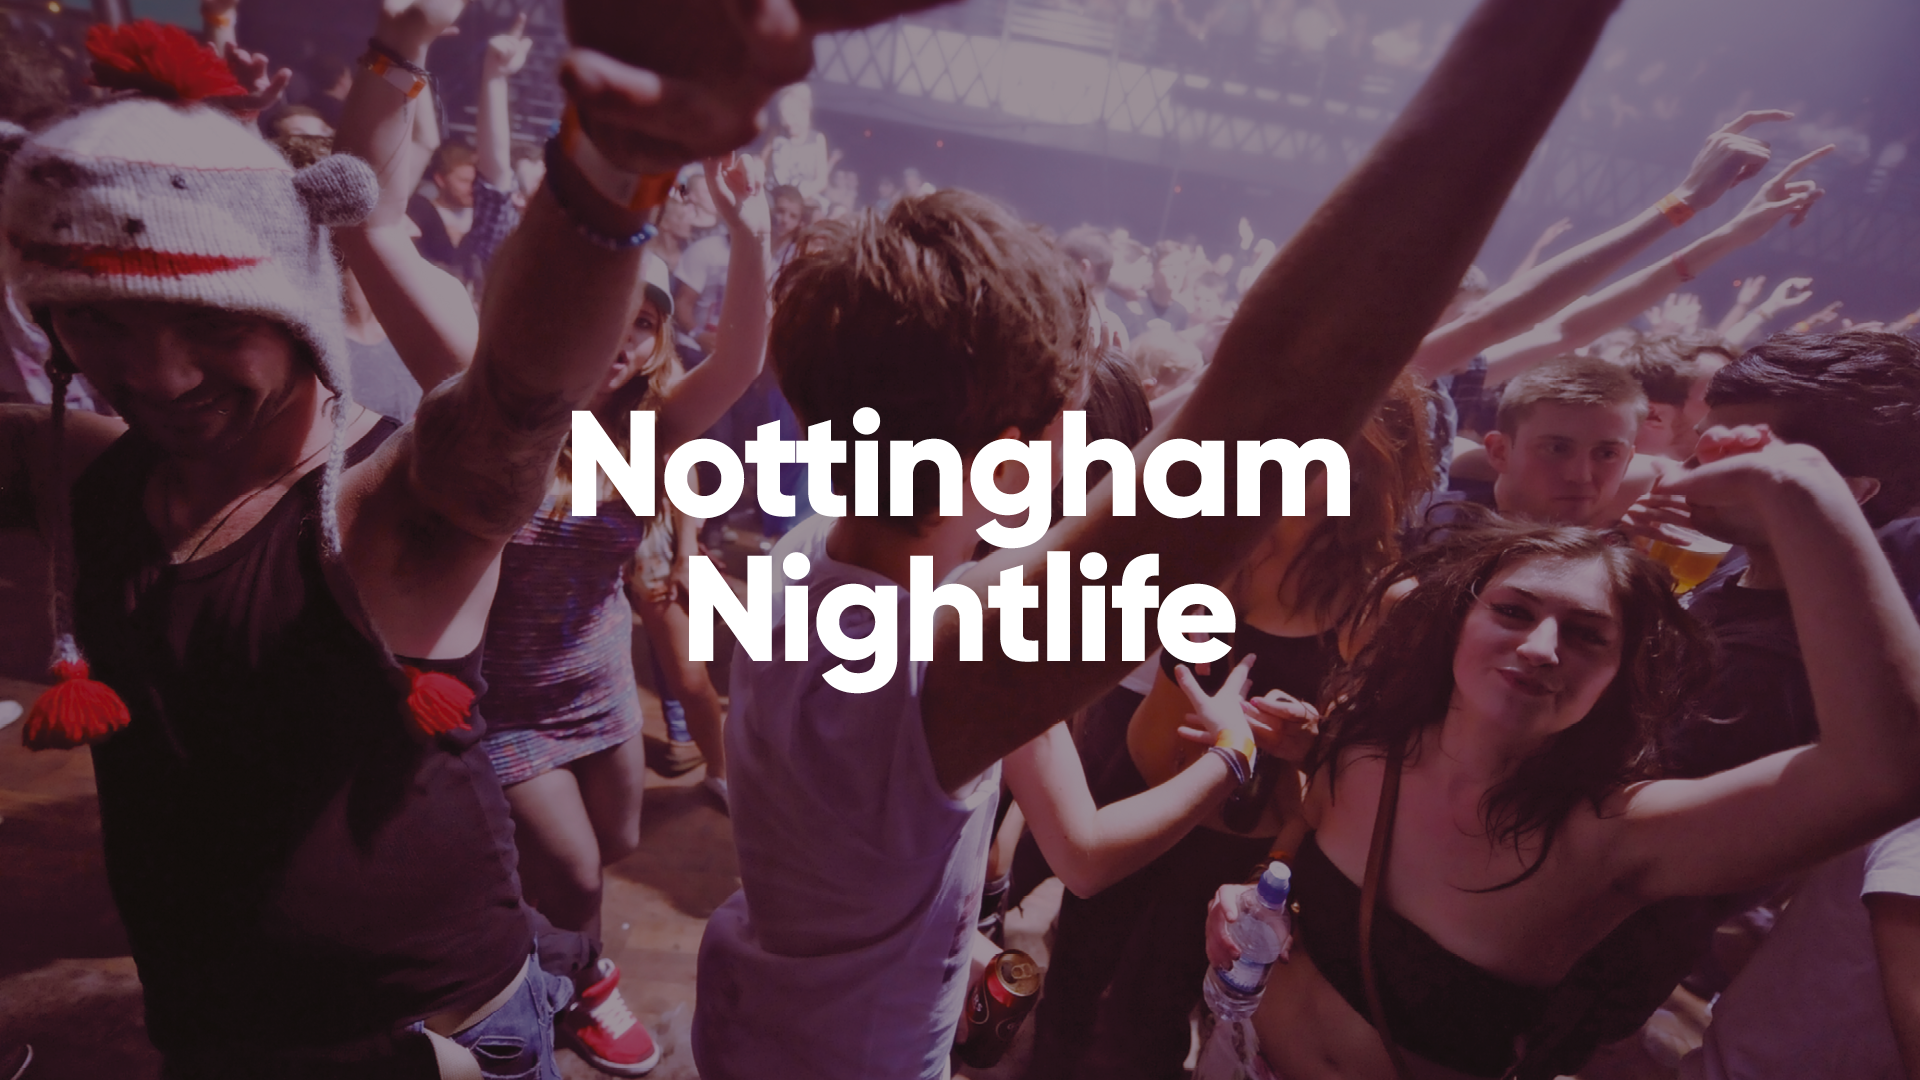 Nottingham Nightlife